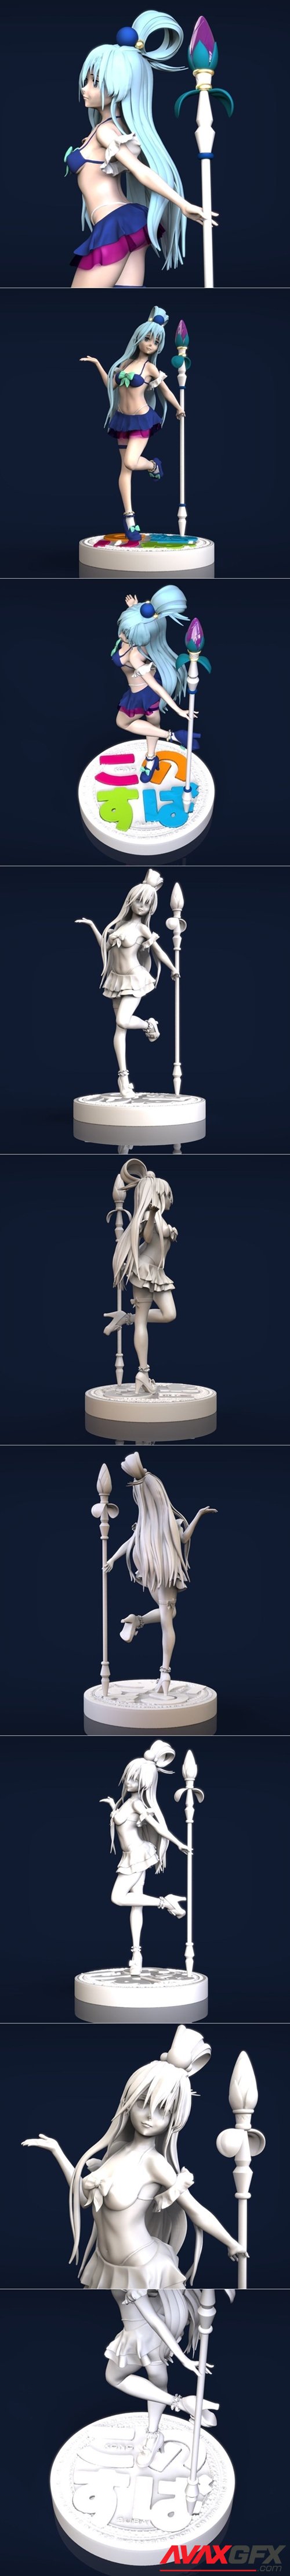 Goddess Aqua from anime series KonoSuba – 3D Printable STL